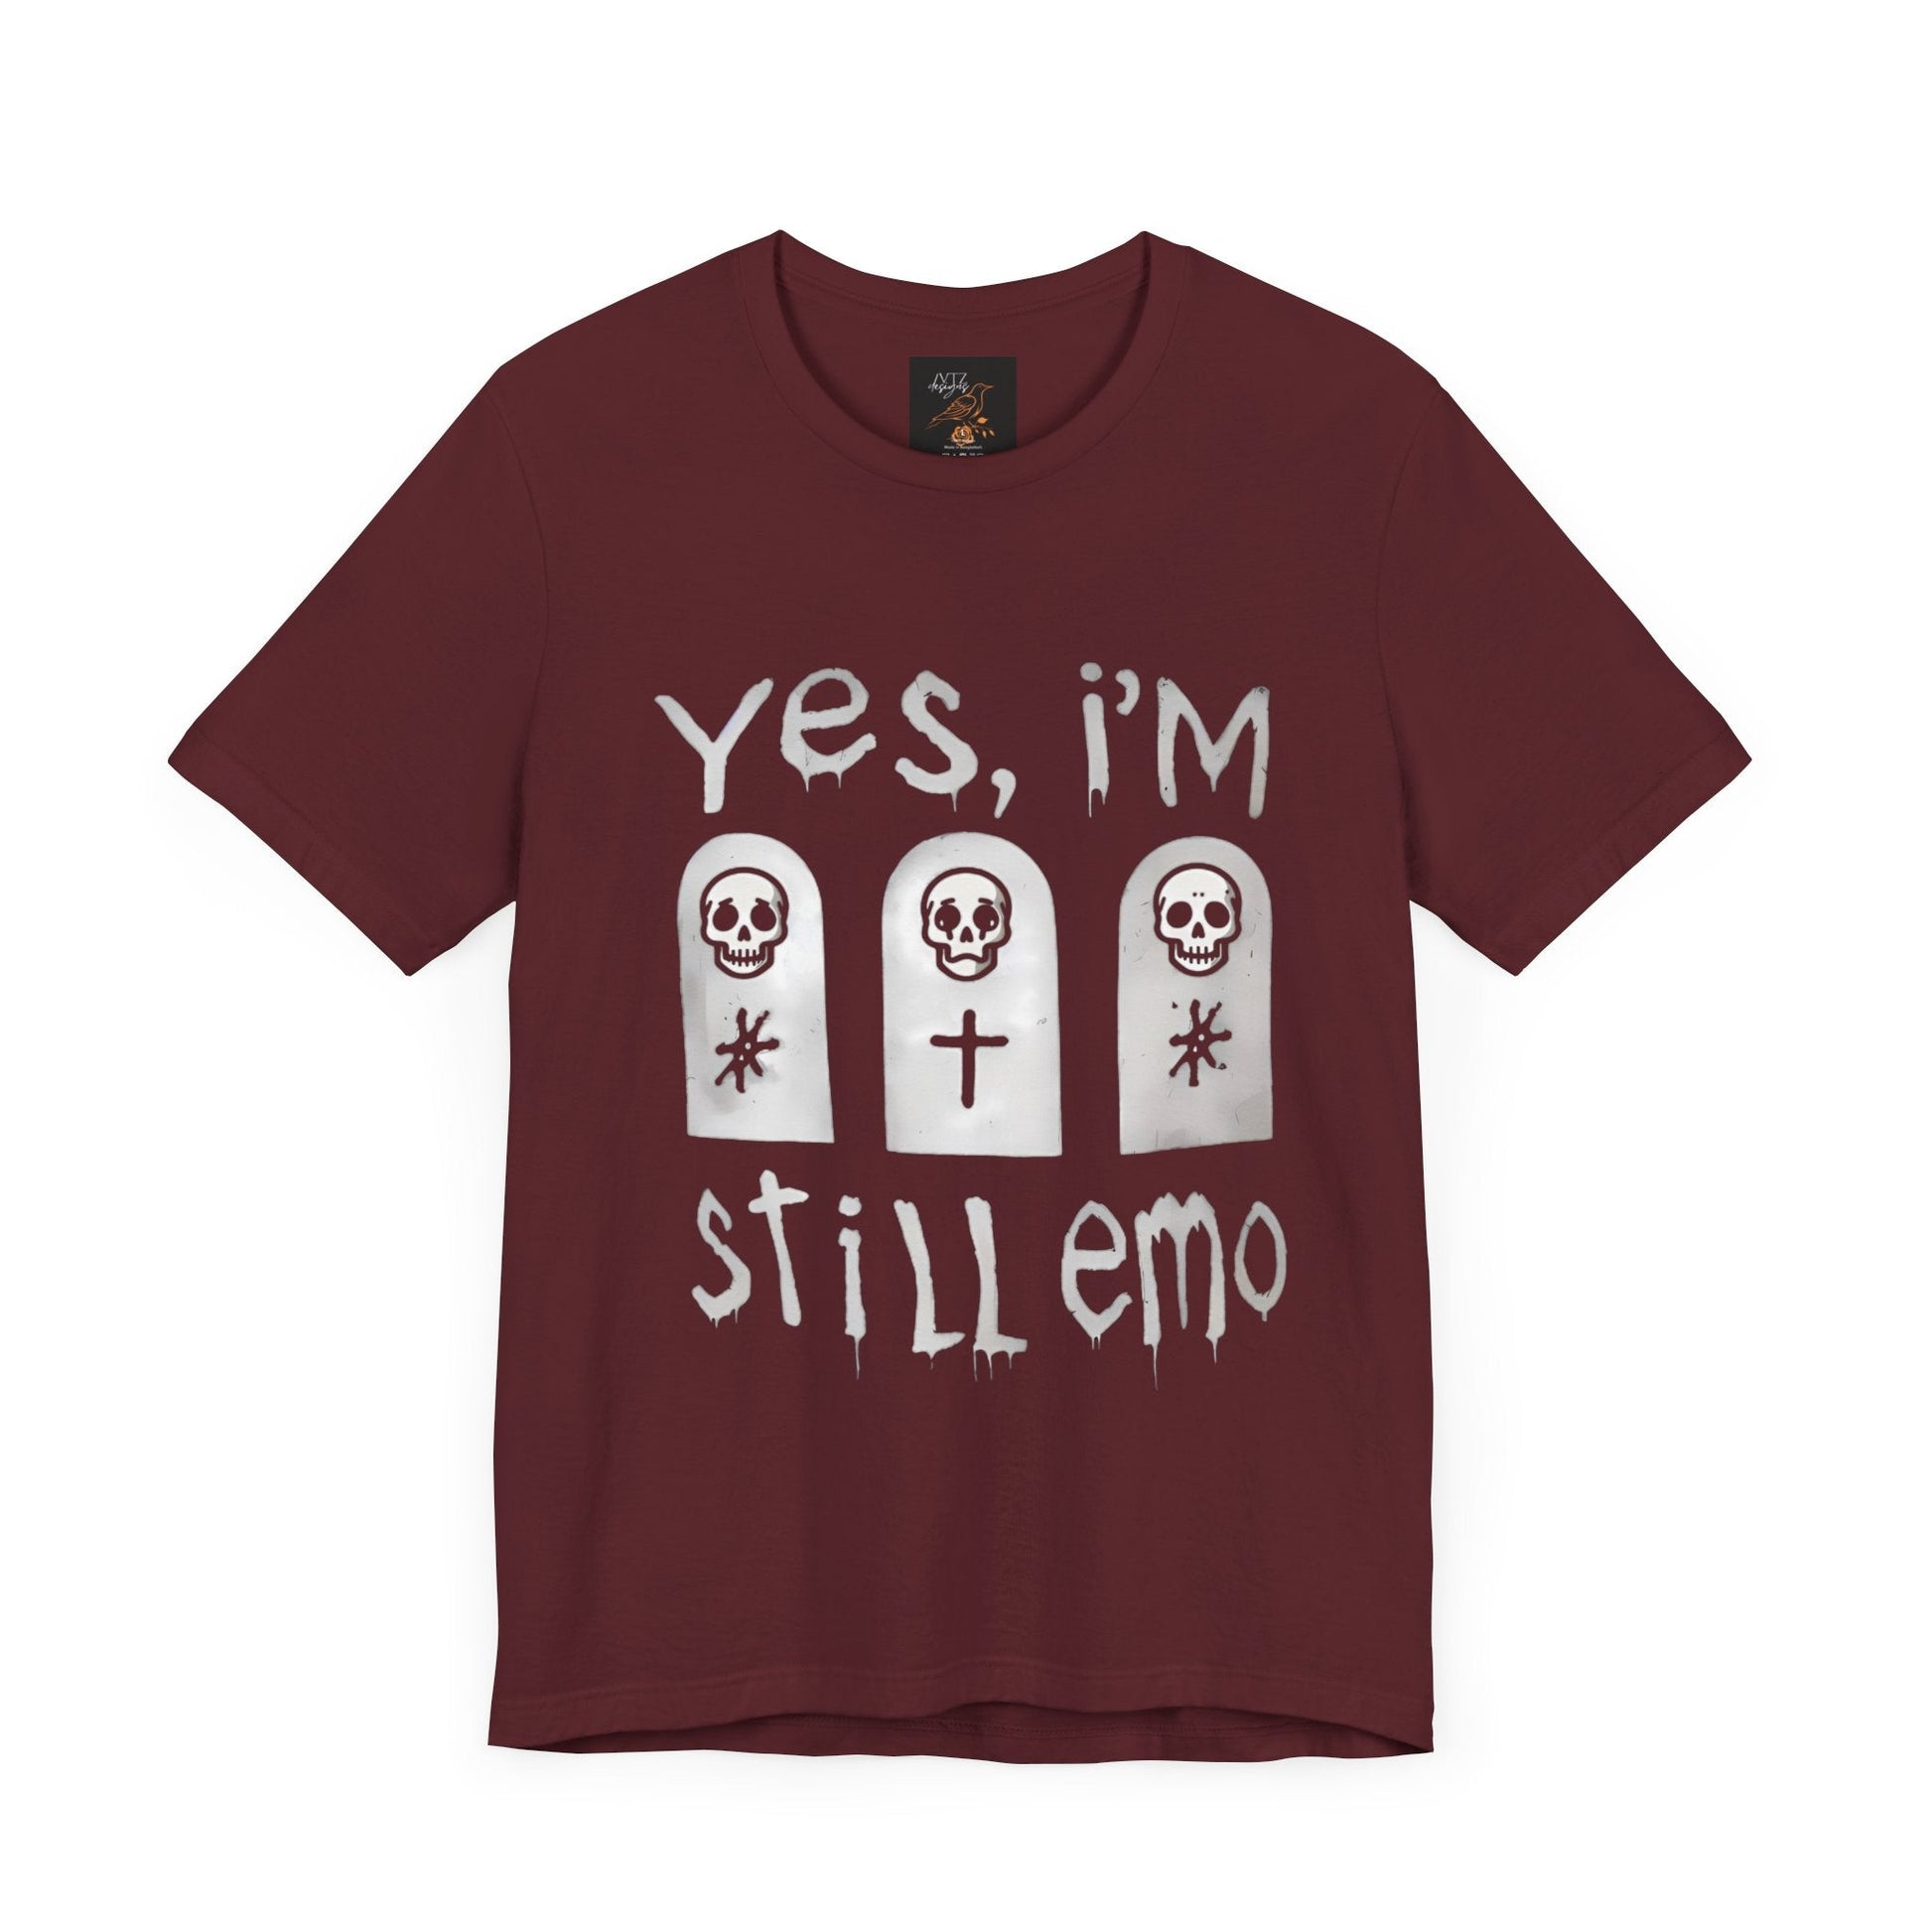 Yes I'm Still Emo Tee ShirtT - ShirtVTZdesignsMaroonXSclothesclothingCotton